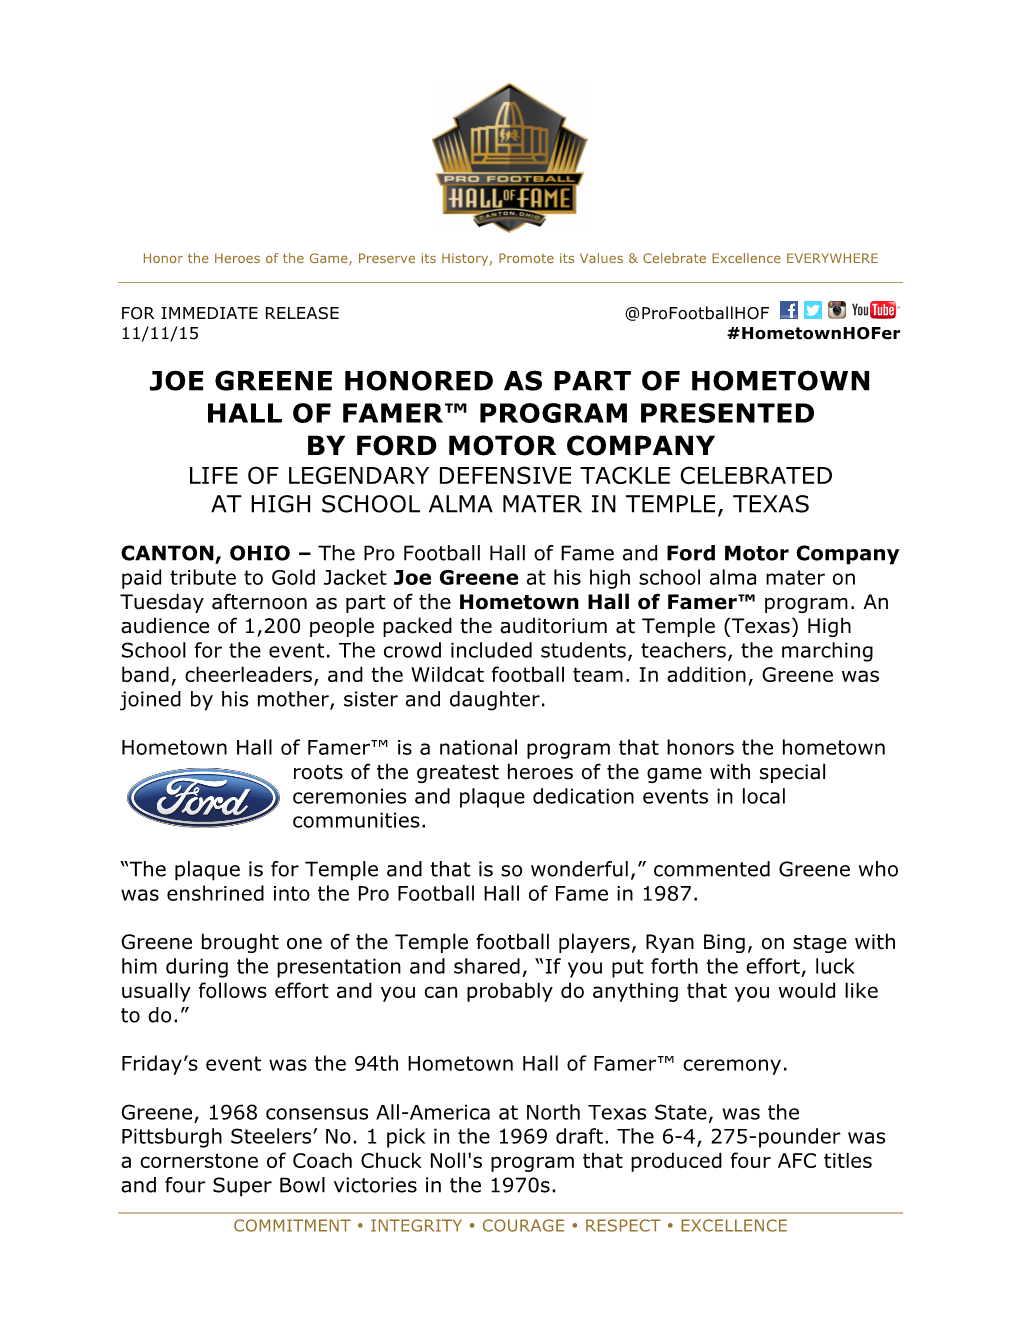 Joe Greene Honored As Part of Hometown Hall of Famer